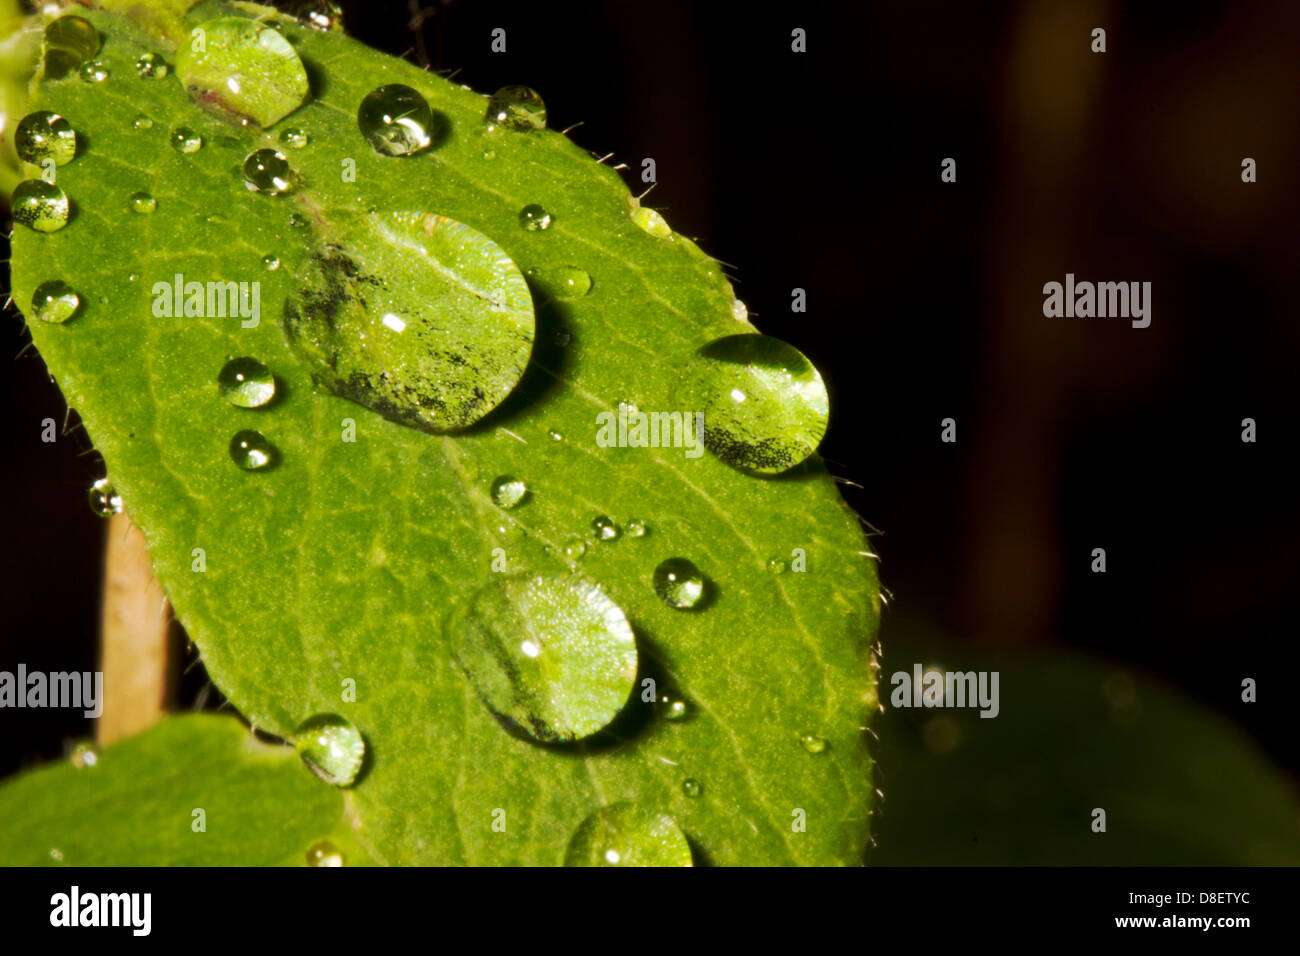 Adhesion cohesion fotografías e imágenes de alta resolución - Alamy